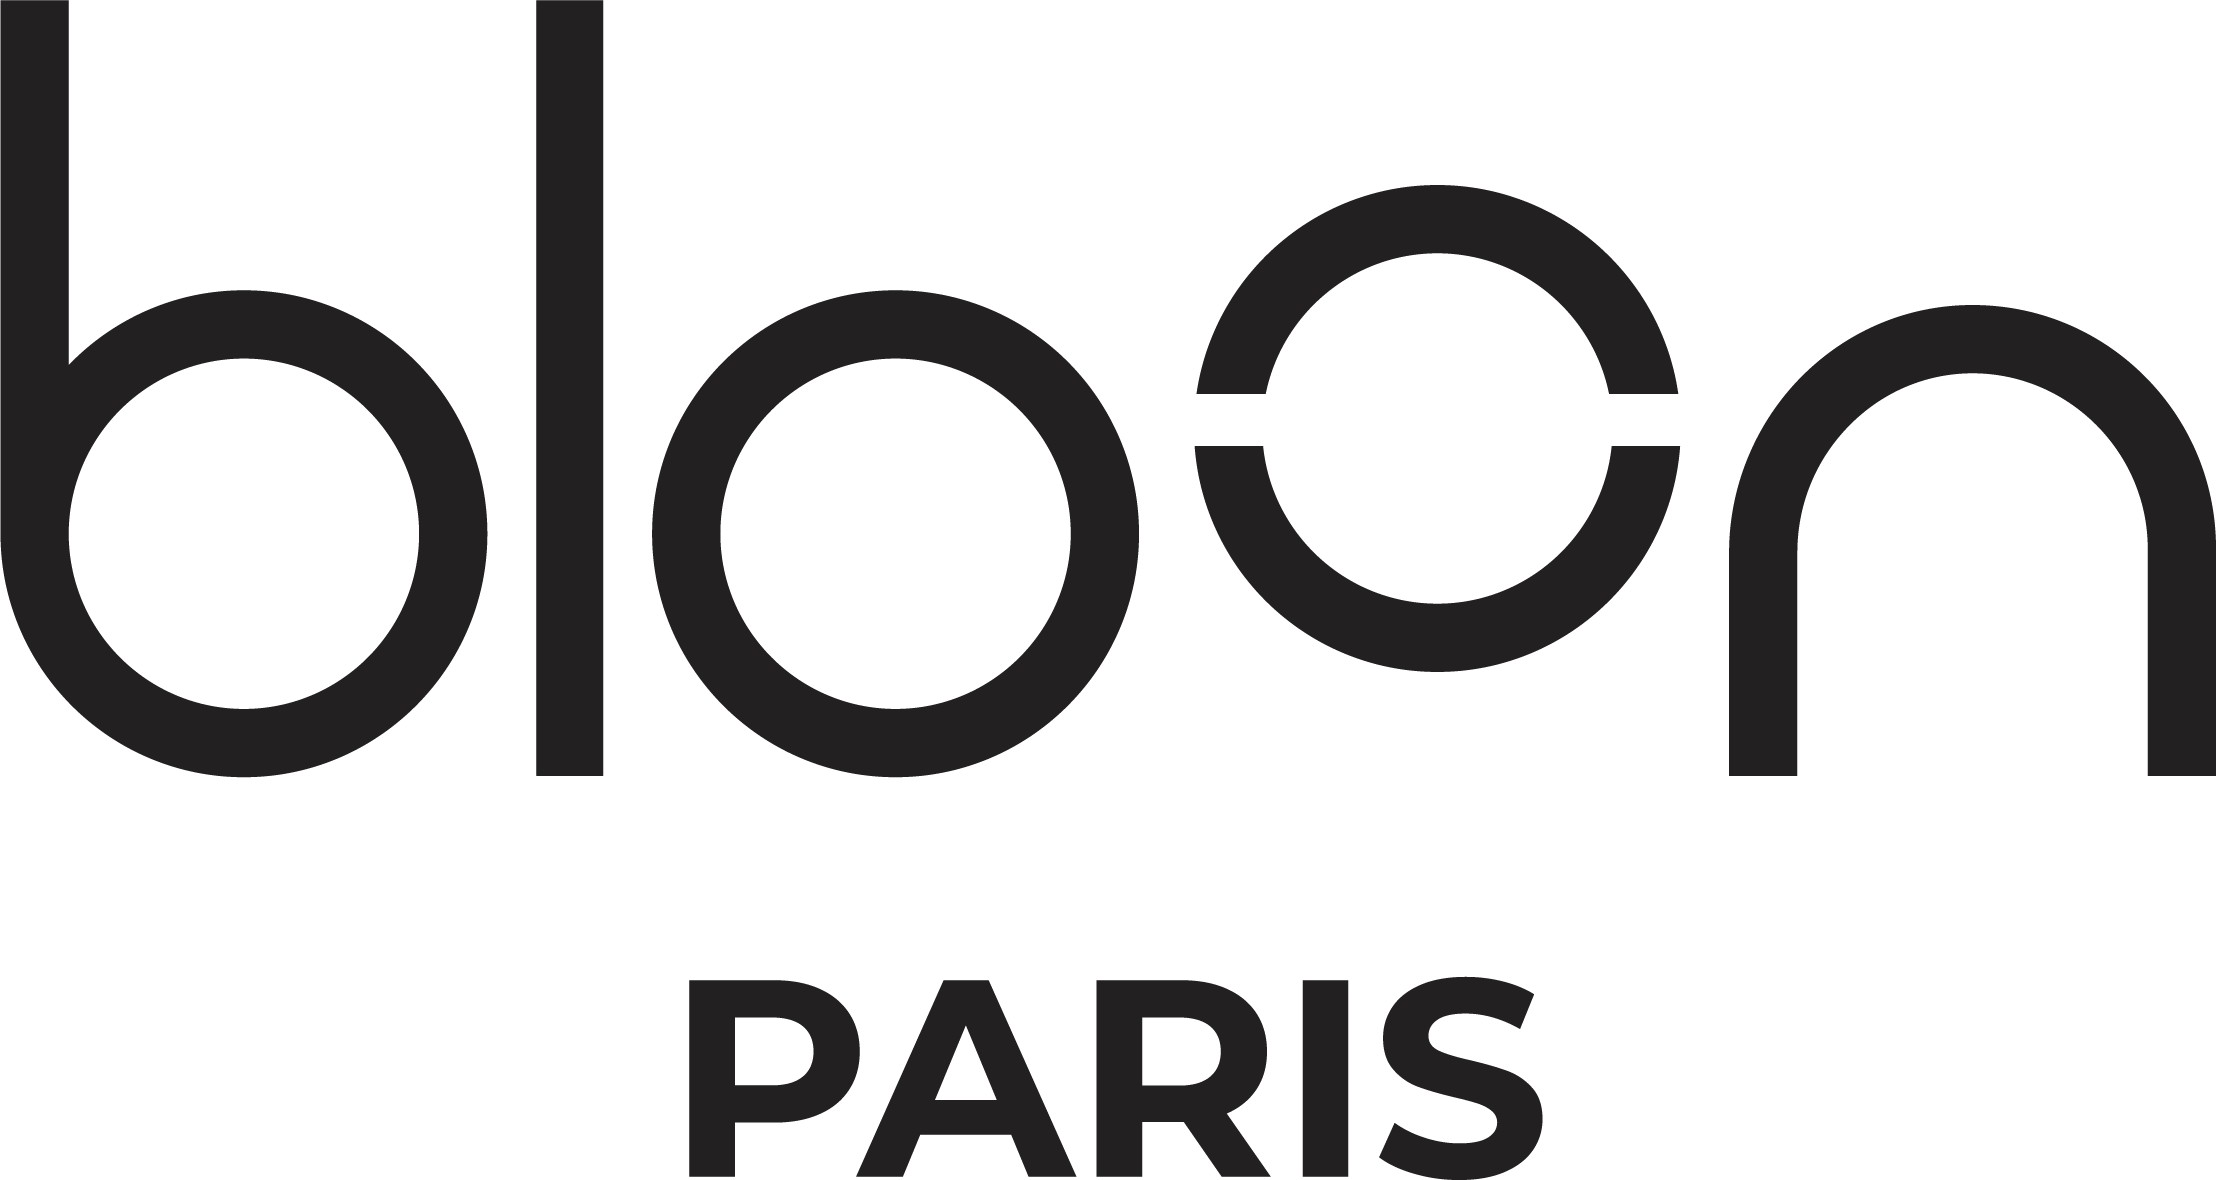 Bloon Paris